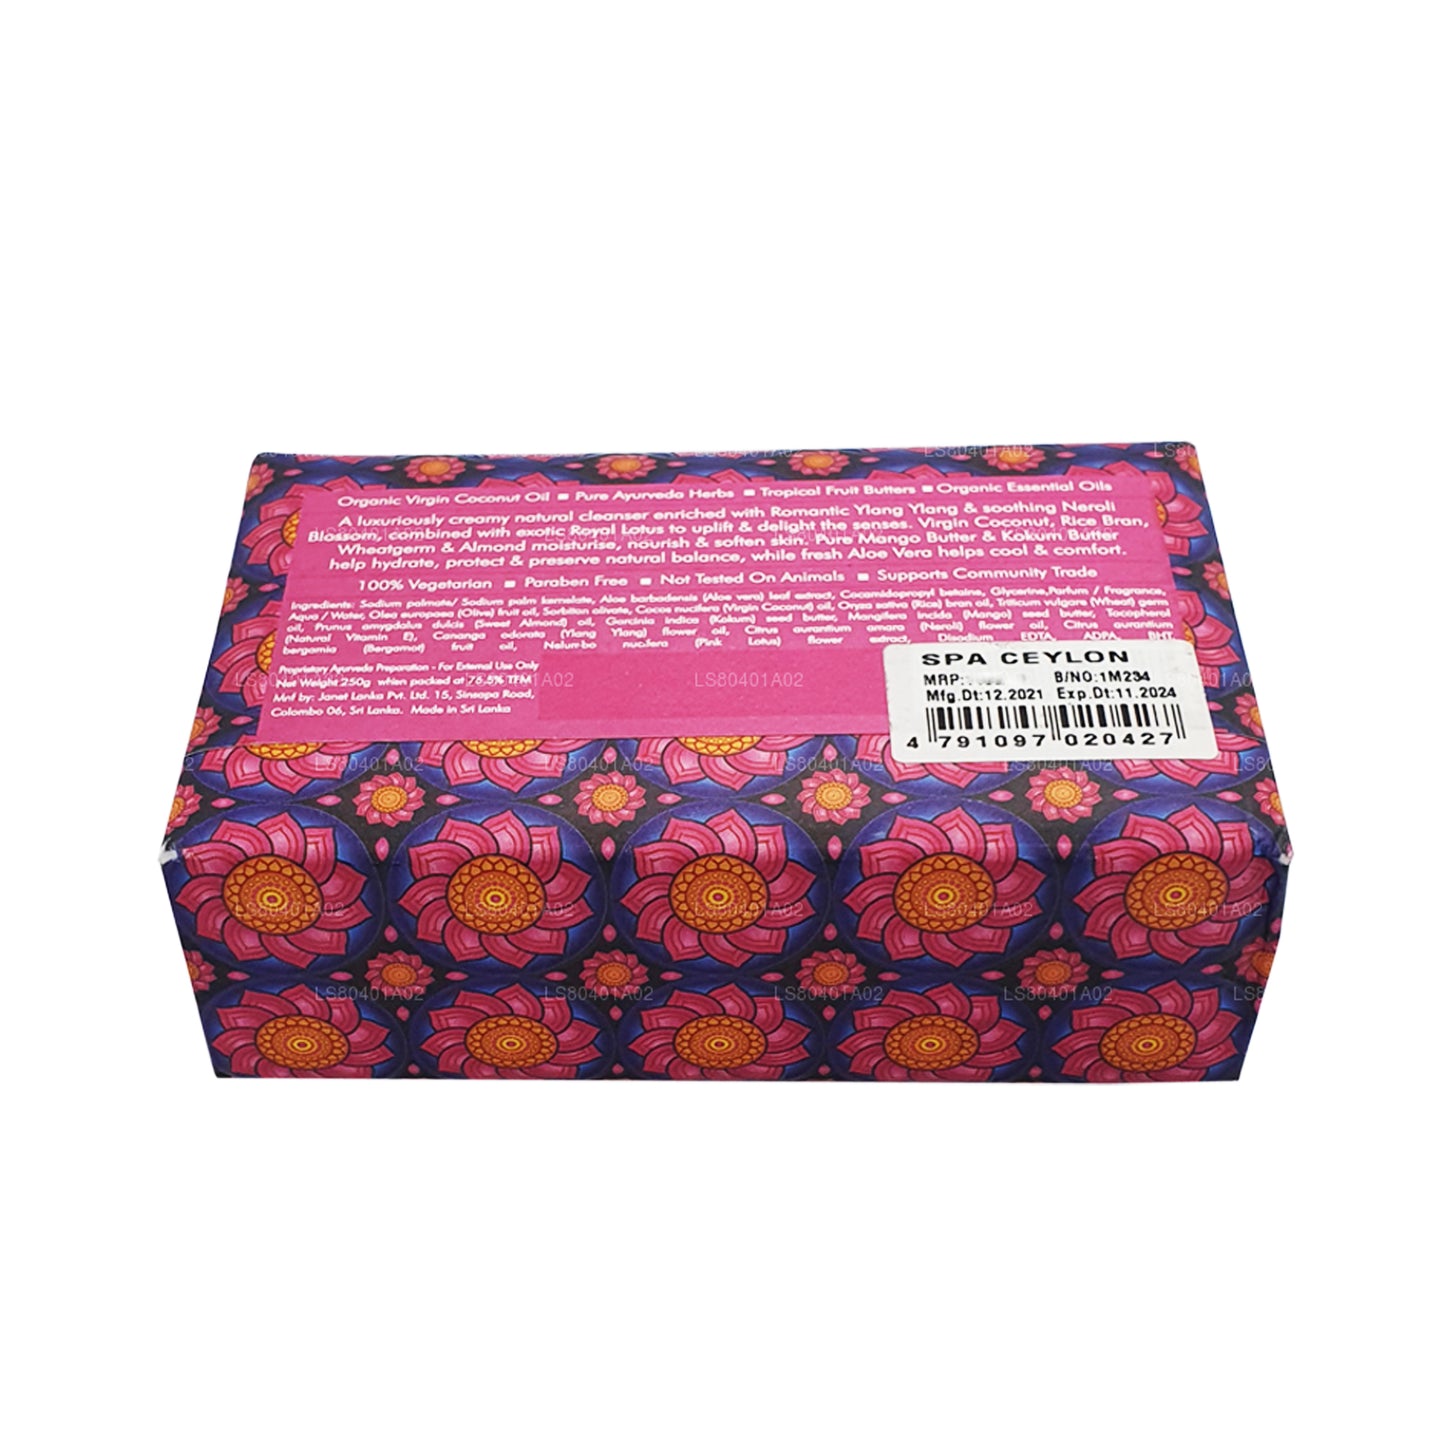 Savon de luxe Spa Ceylon Pink Lotus et amandes (250 g)